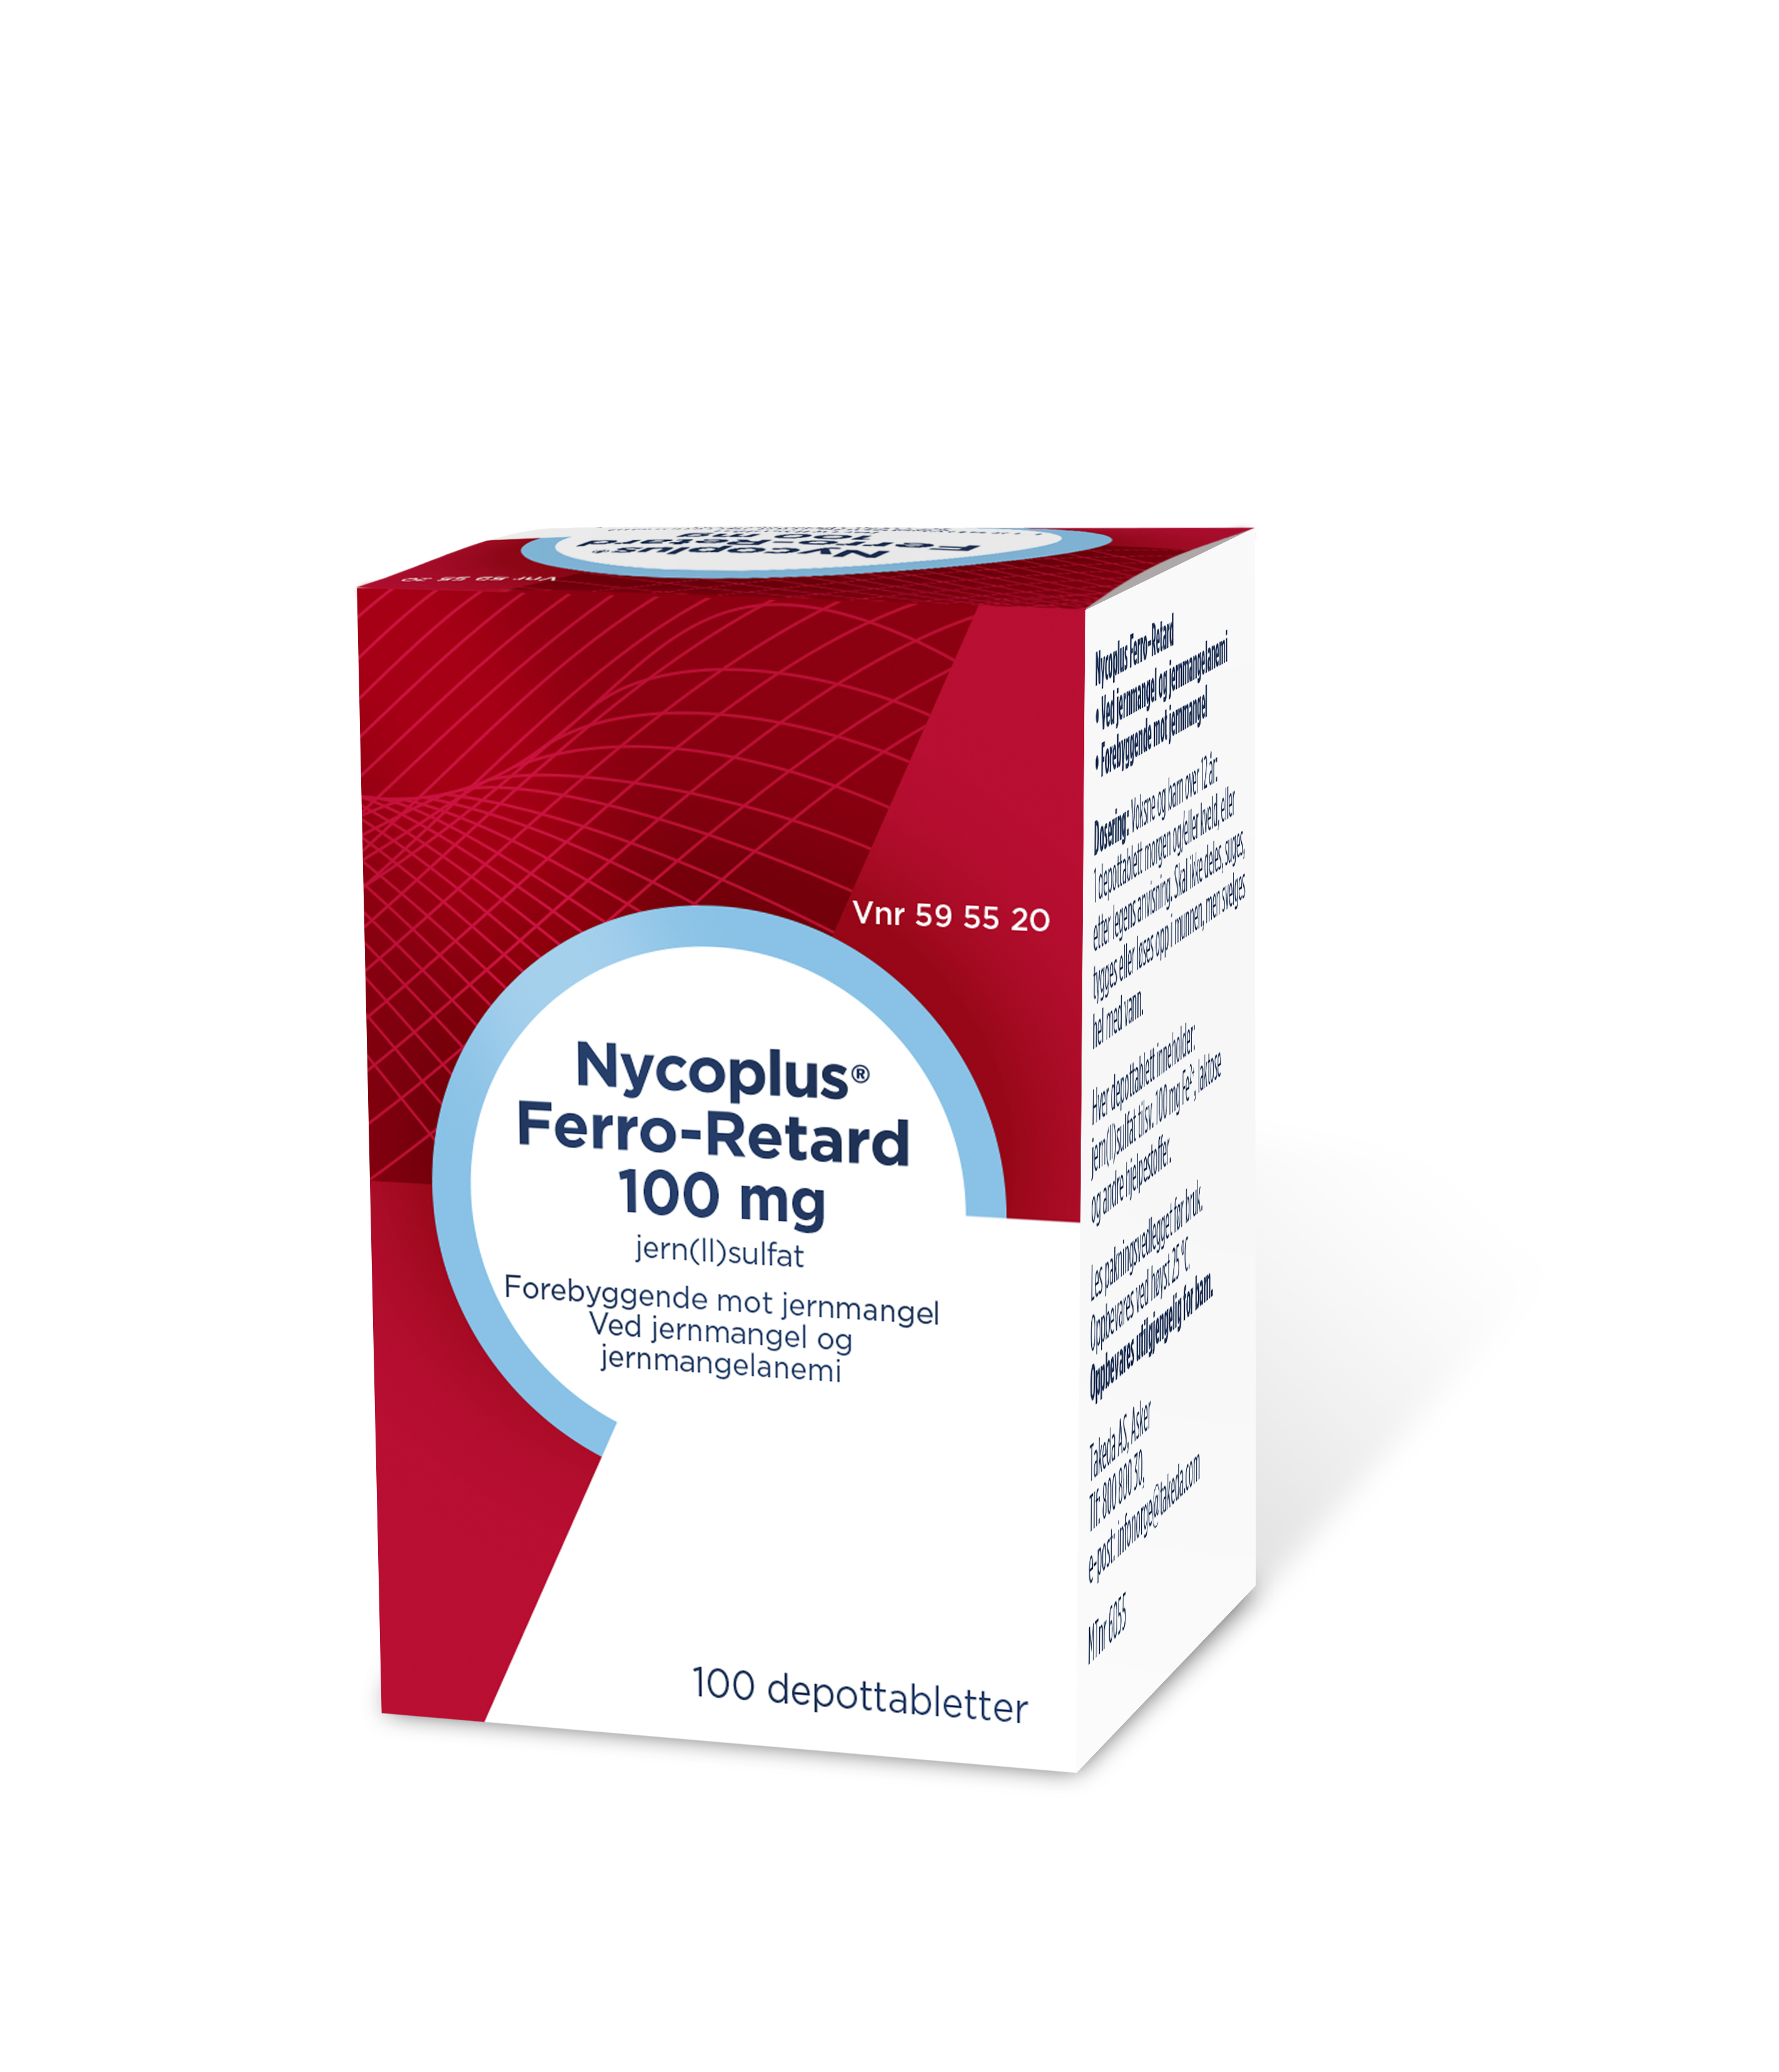 Nycoplus Ferro-Retard 100 mg depottabletter, 100 stk.